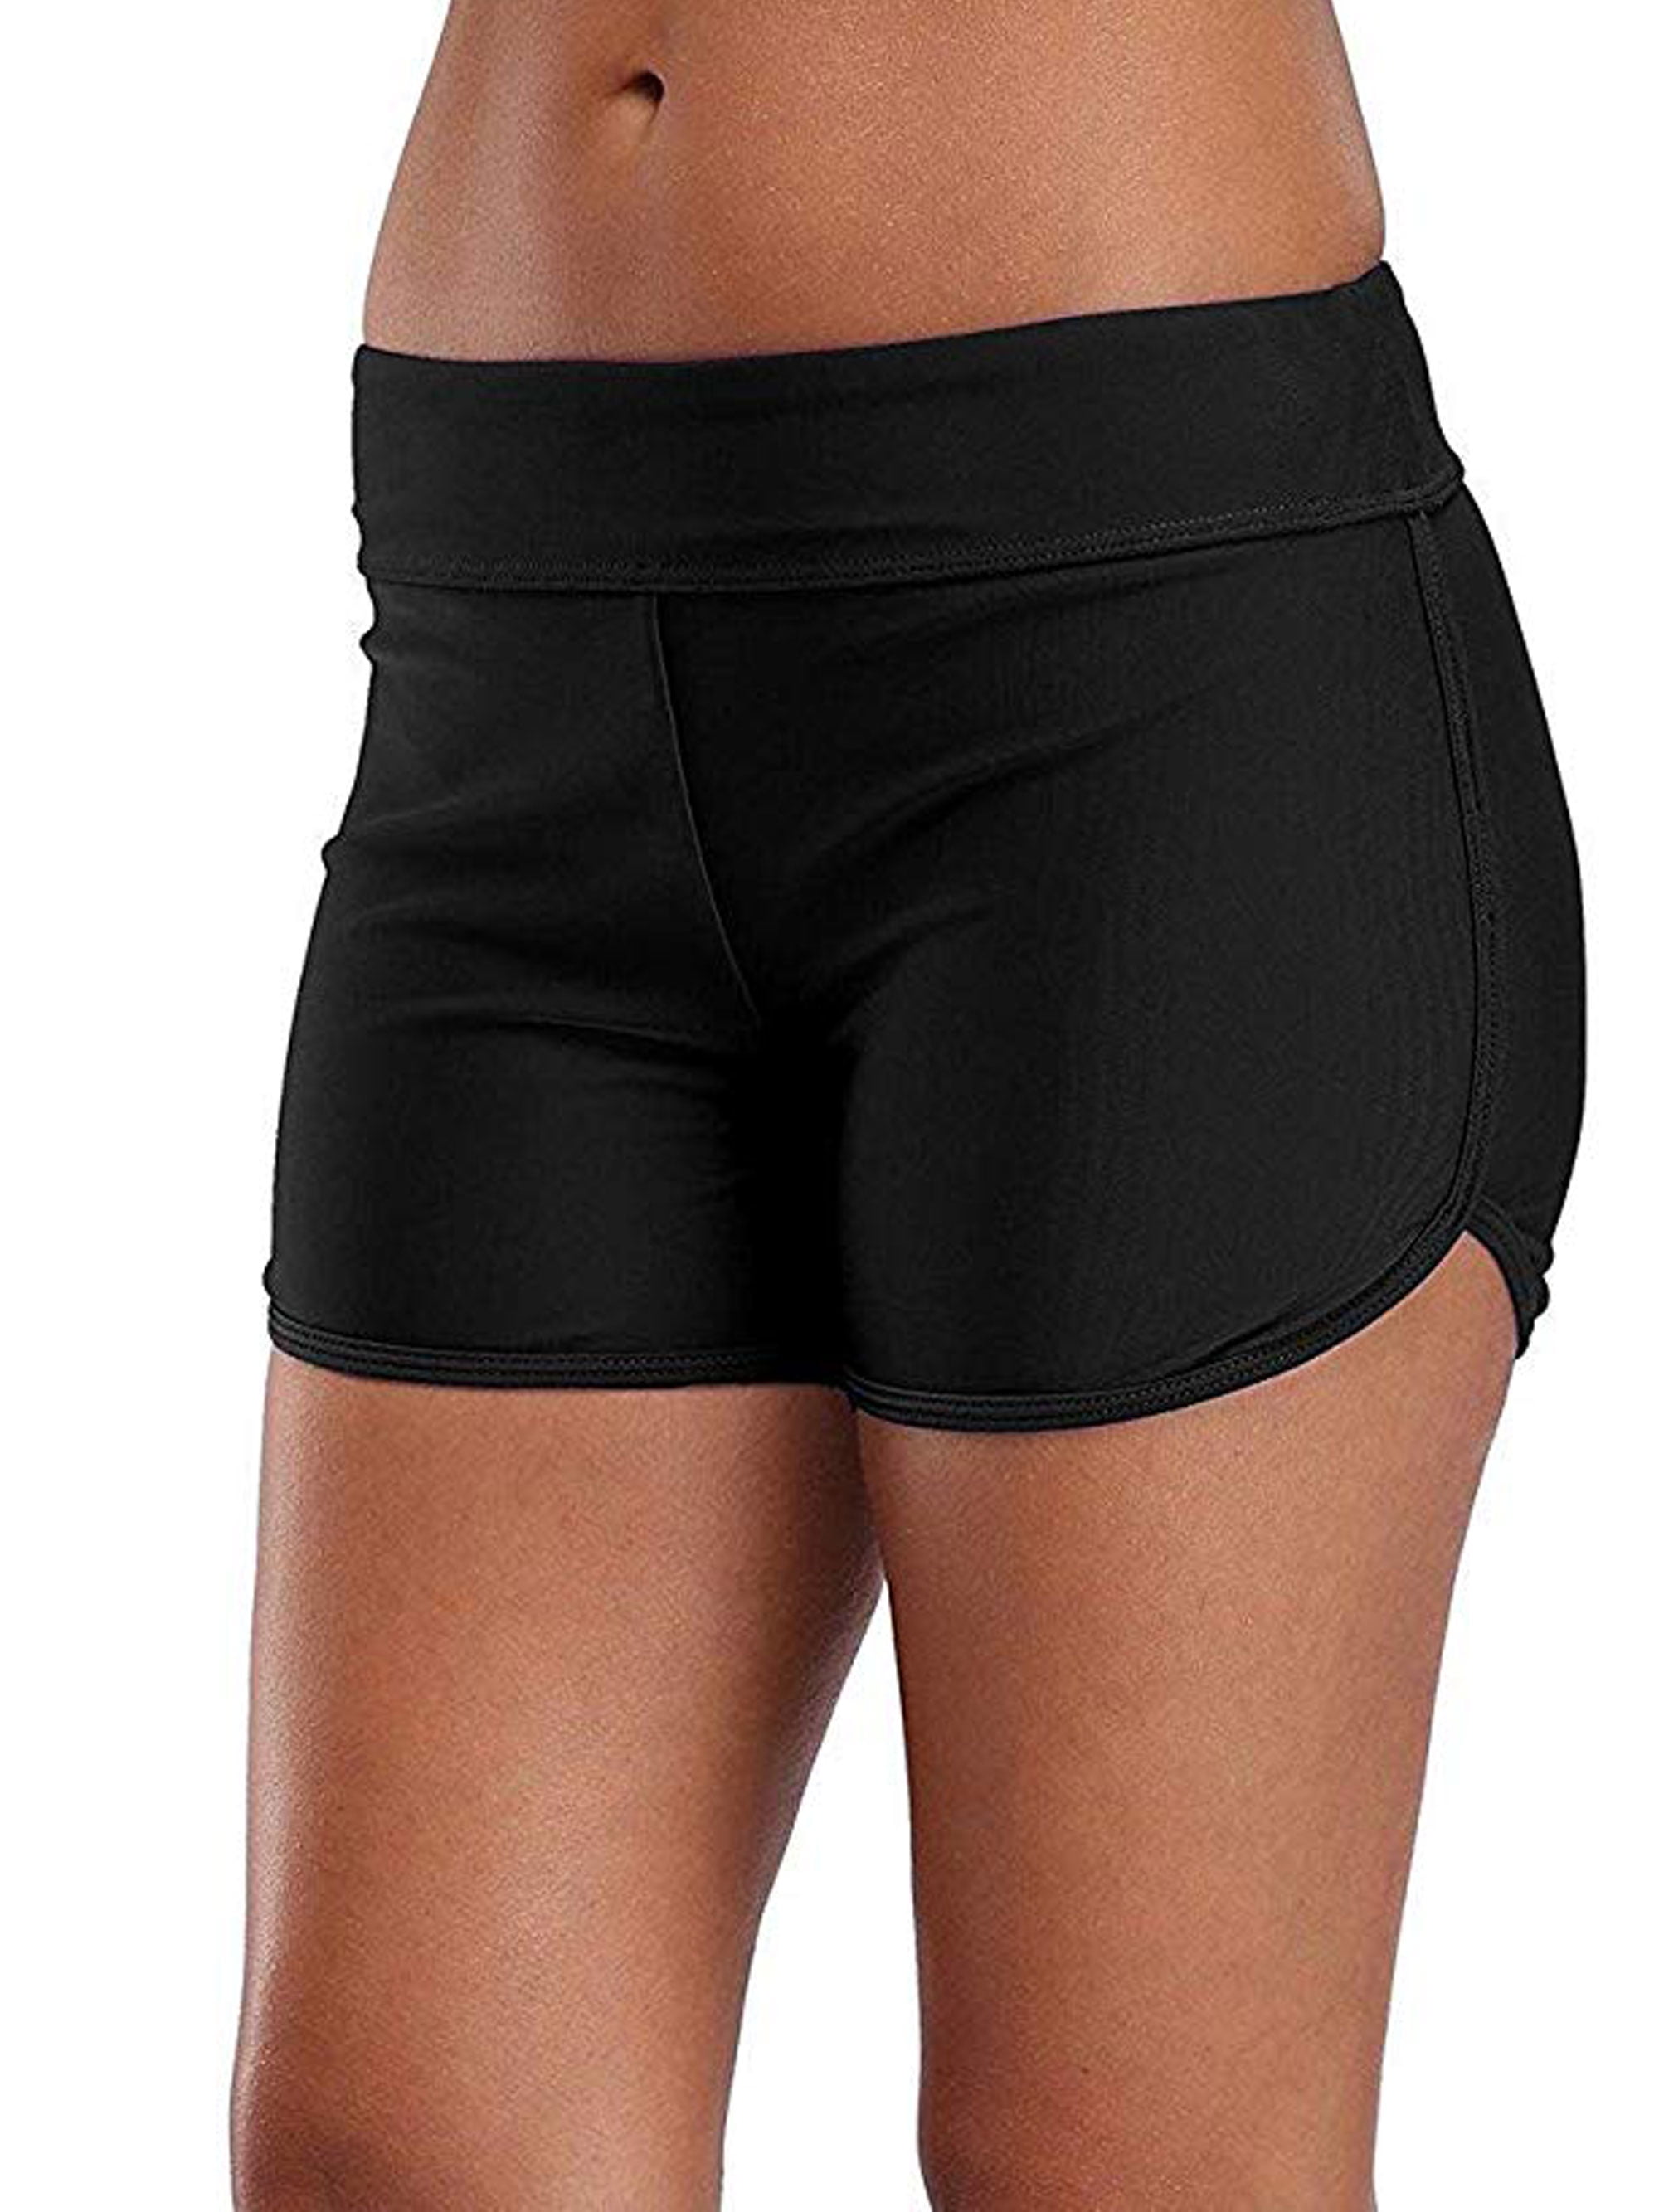 NONMON Women Swim Shorts Ladies Girls Adjustable Drawstring Swimming Boardshorts Trunks Bikini Pants Swimwear UV Protection